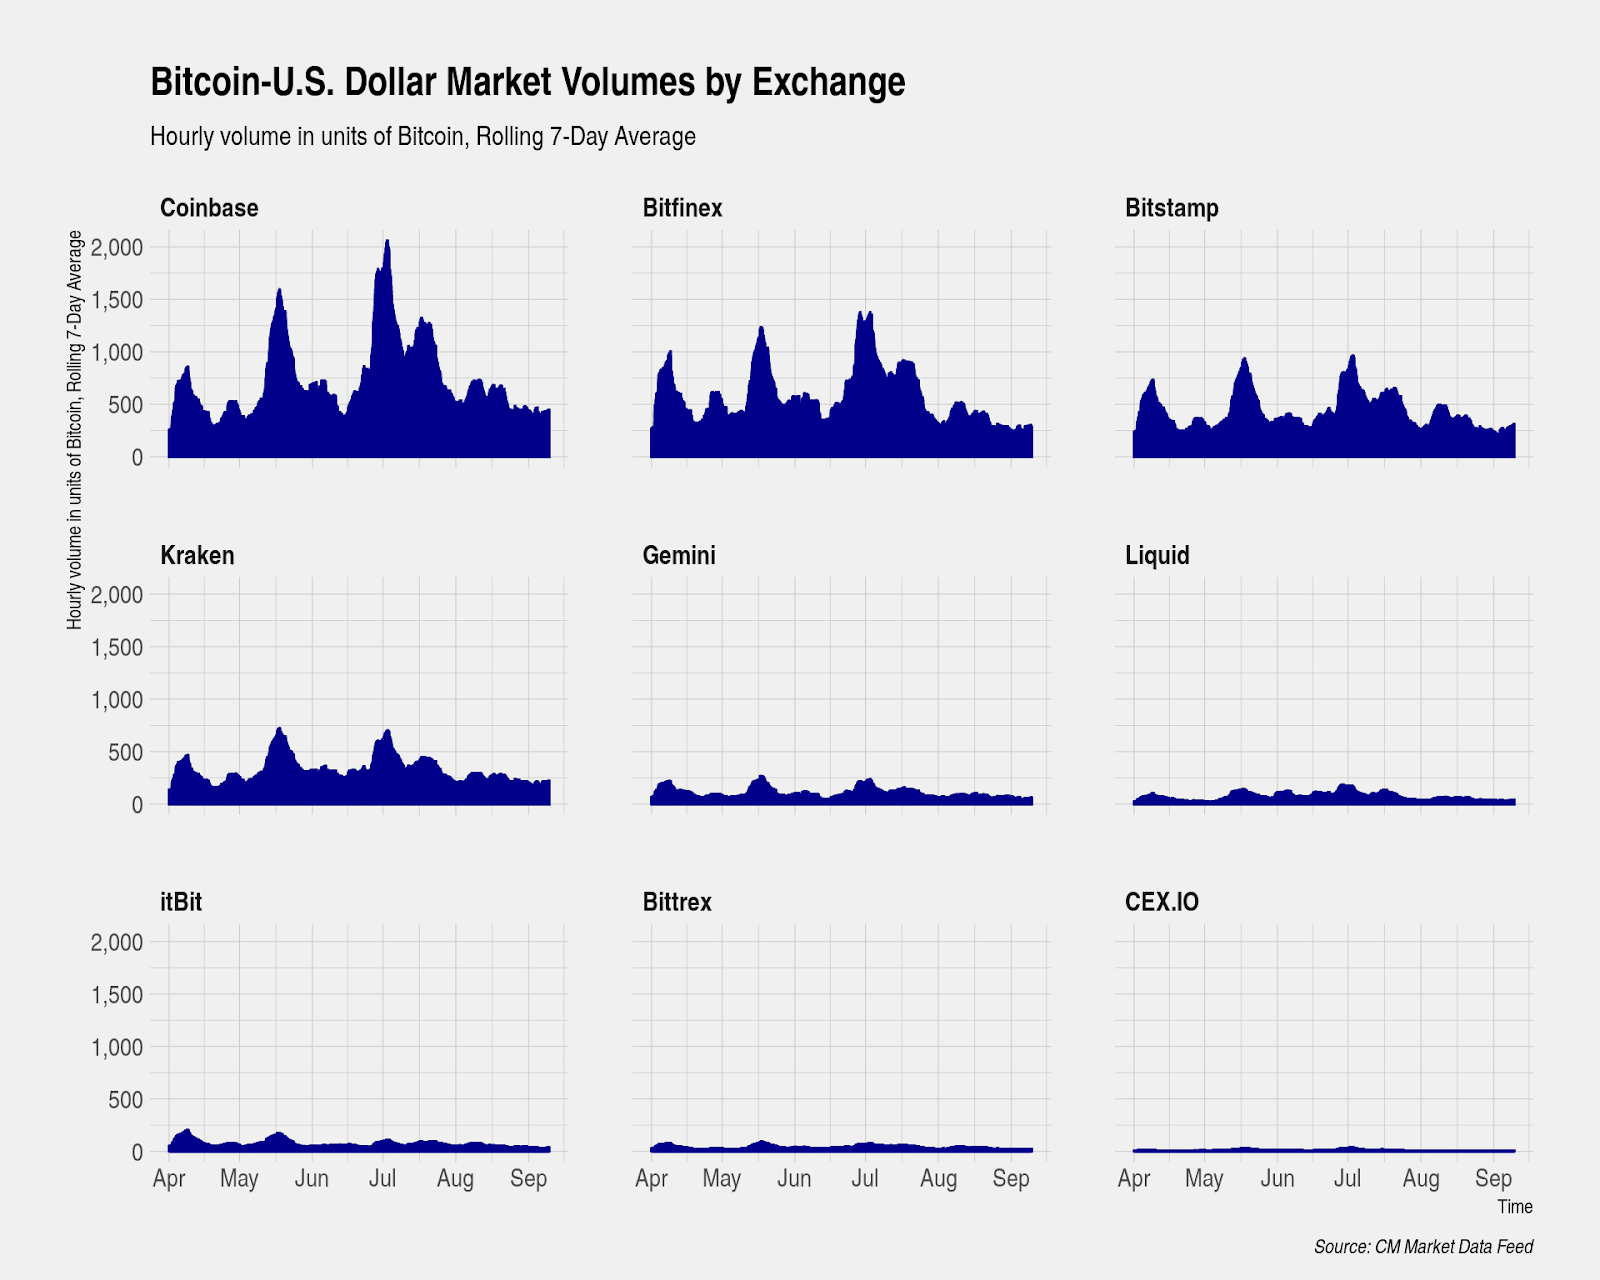 Four Crypto Exchanges Rake In 90% of Bitcoin Trading Volume